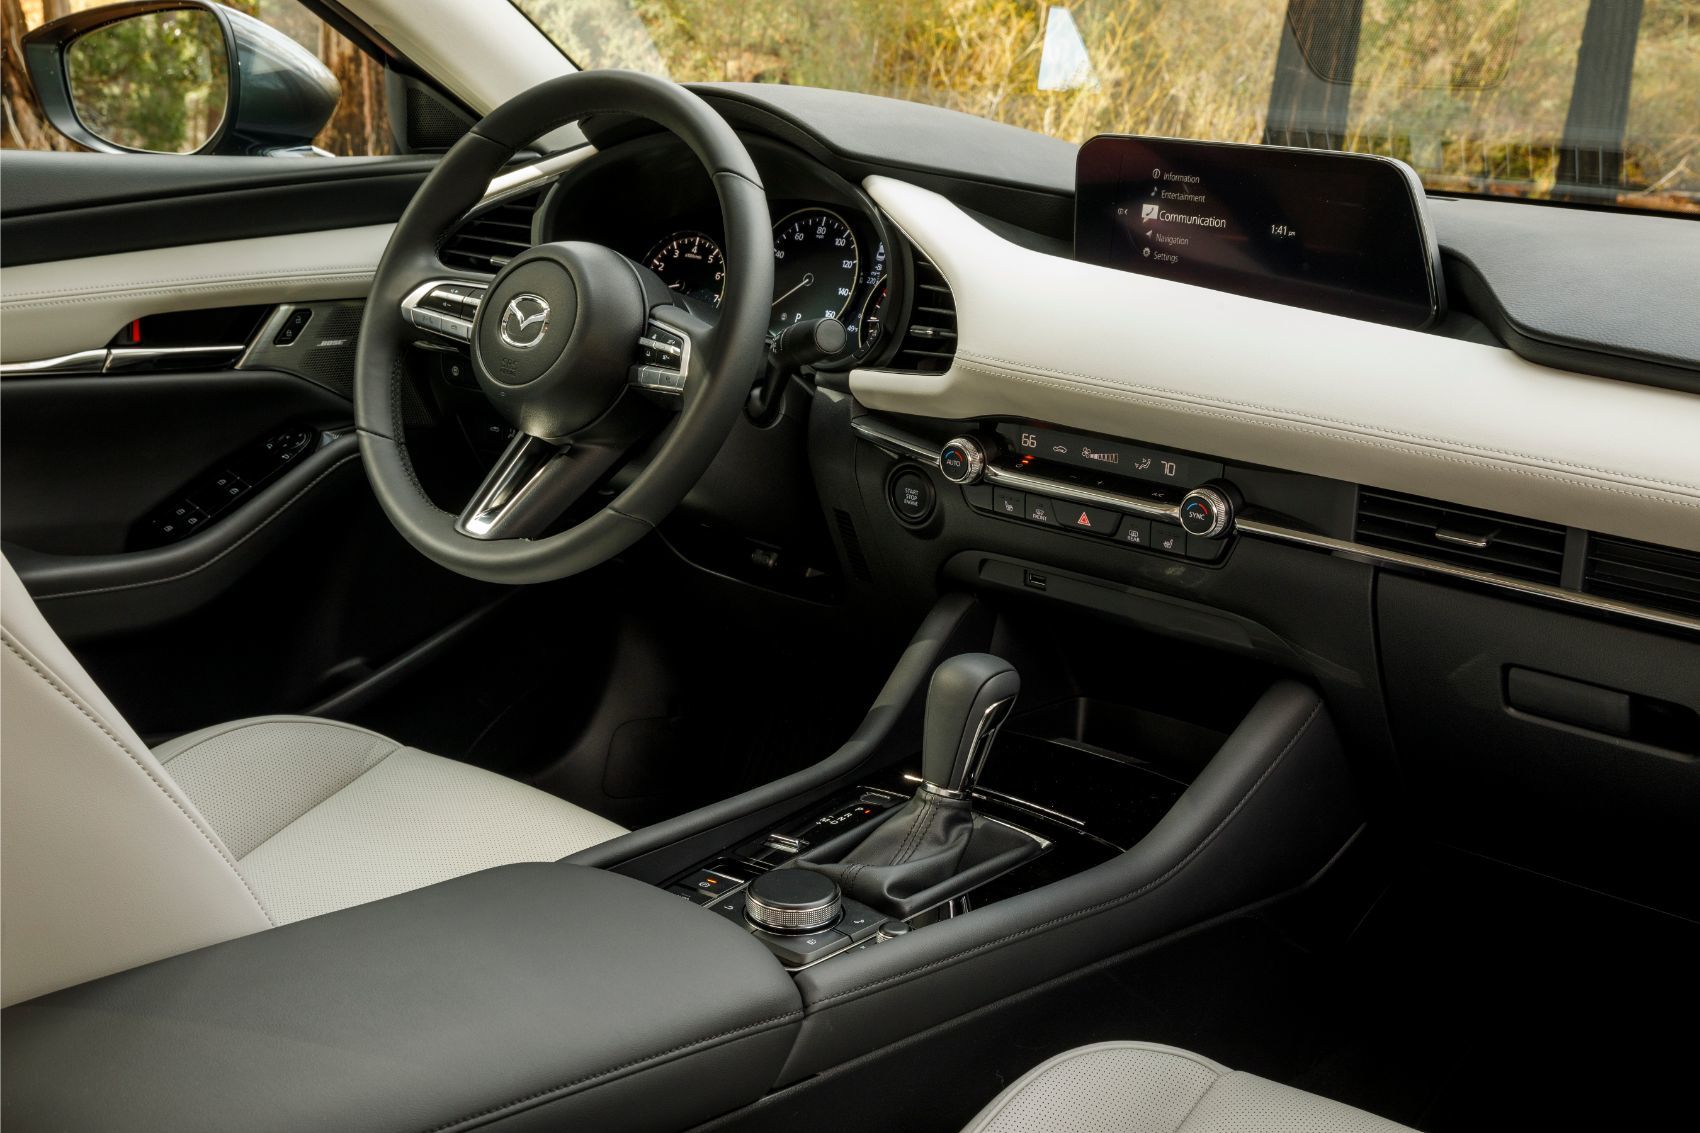 2020 Mazda3 Hatchback Sedan A Quick But Detailed Overview